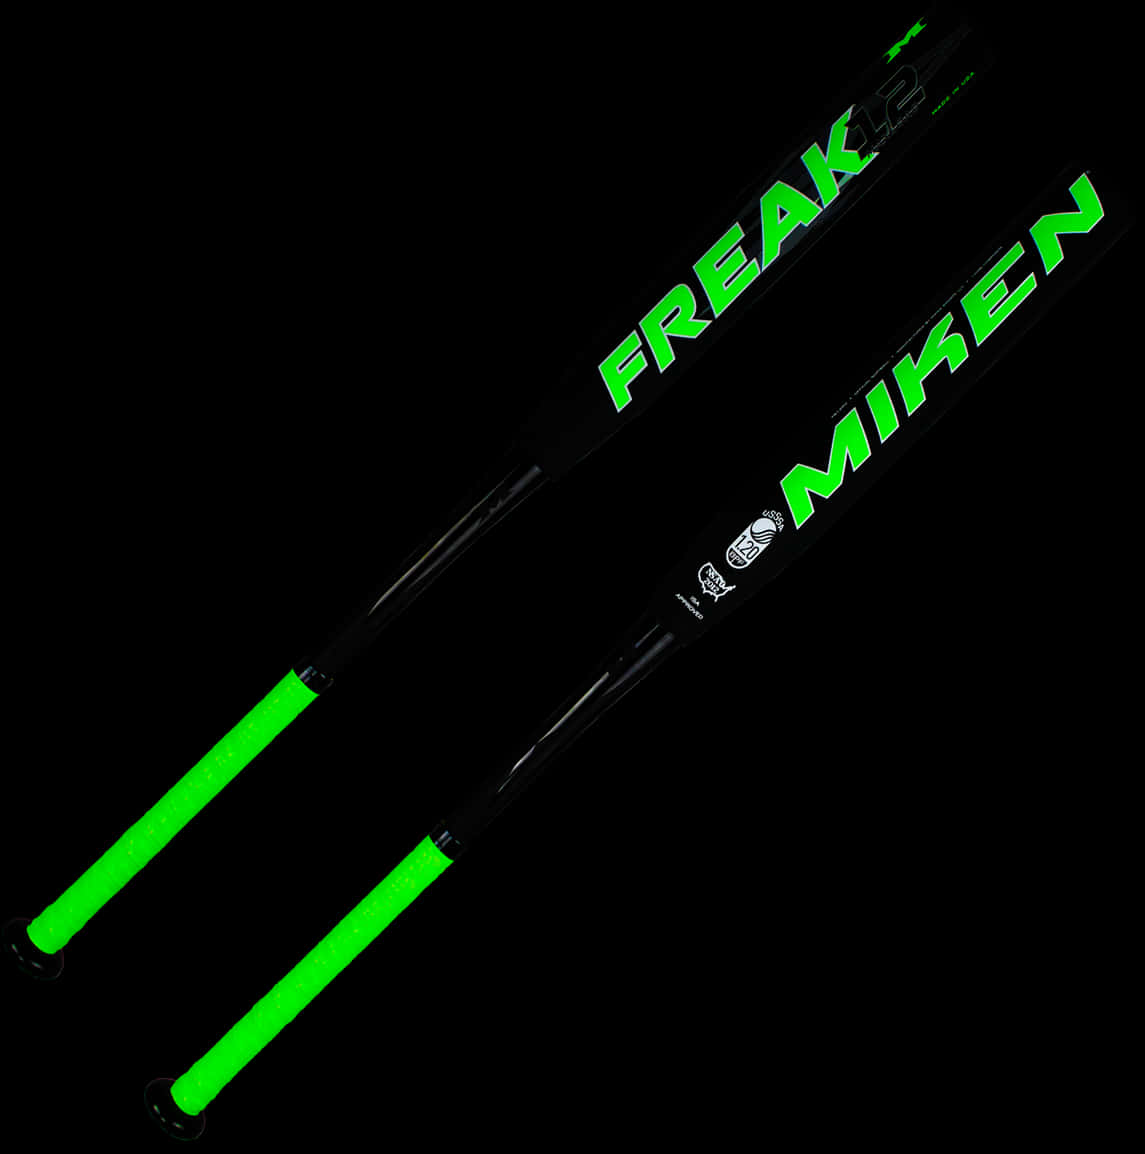 A Black And Green Baseball Bats